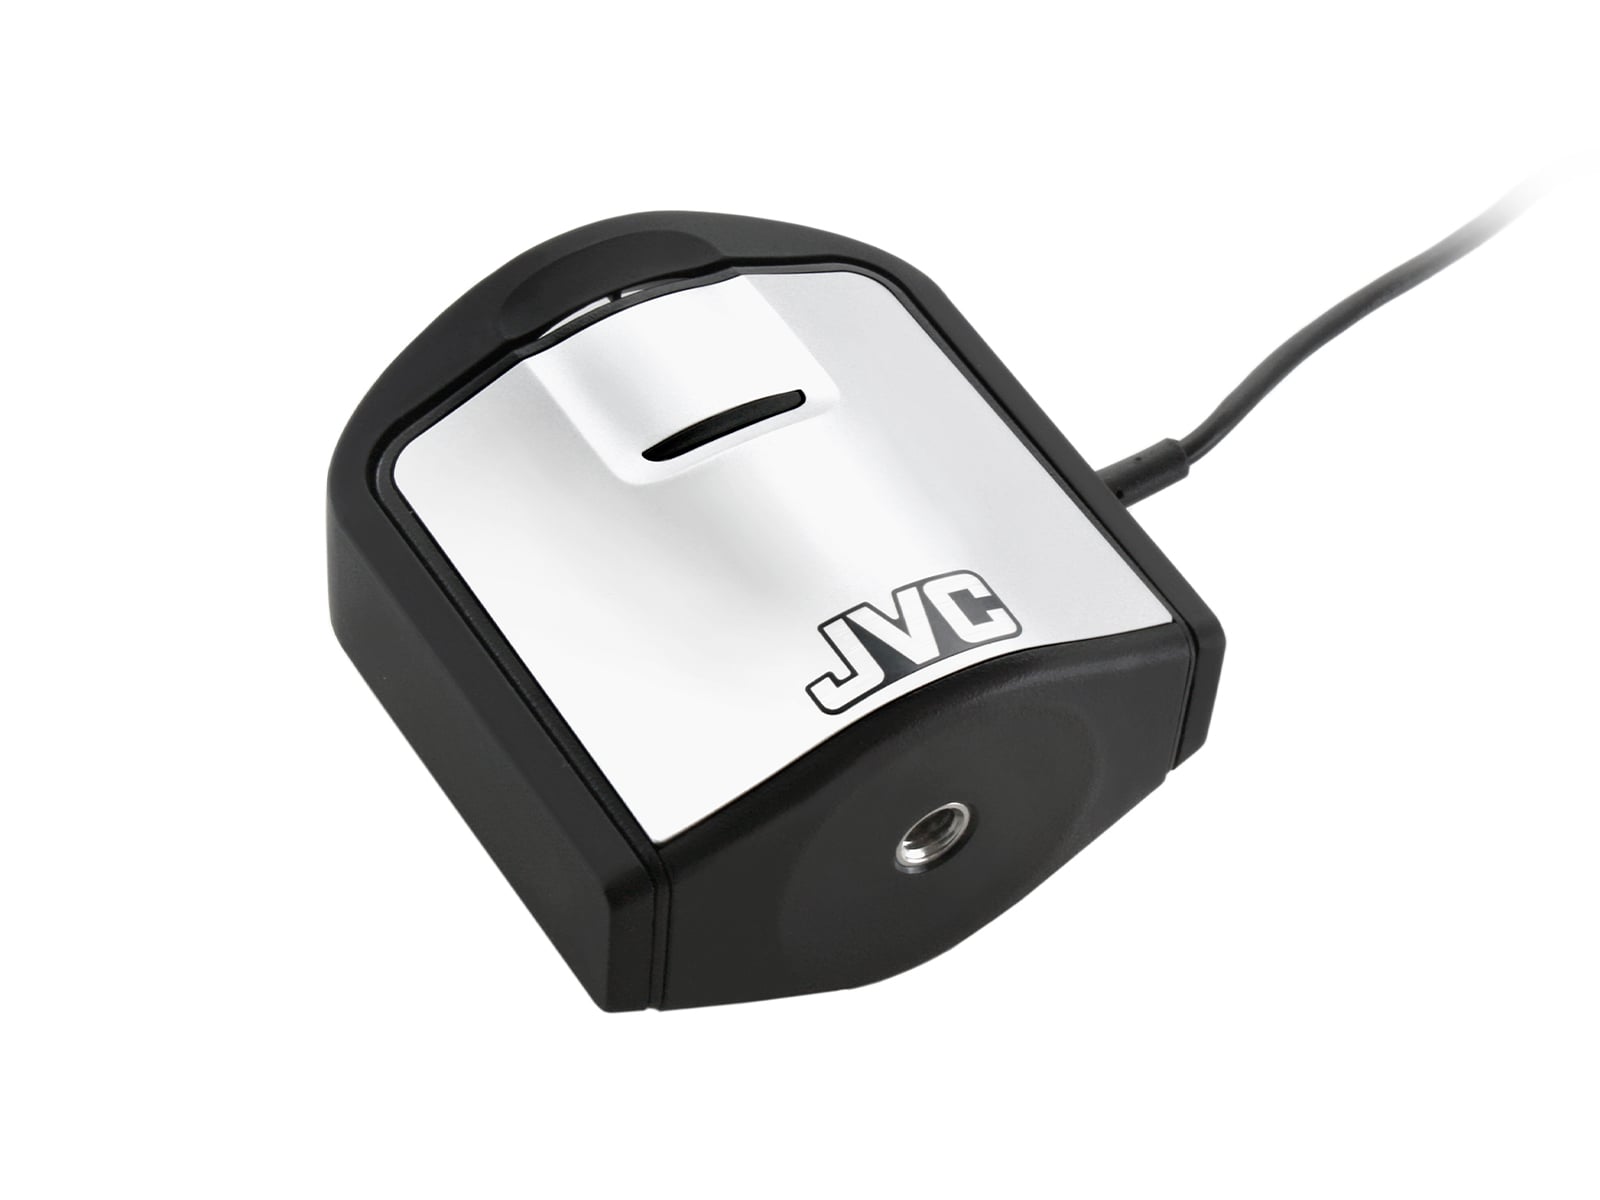 JVC Totoku Medivisor NX Kalibrierungssensor-Kit mit QS-Software (CAL-016) Monitors.com